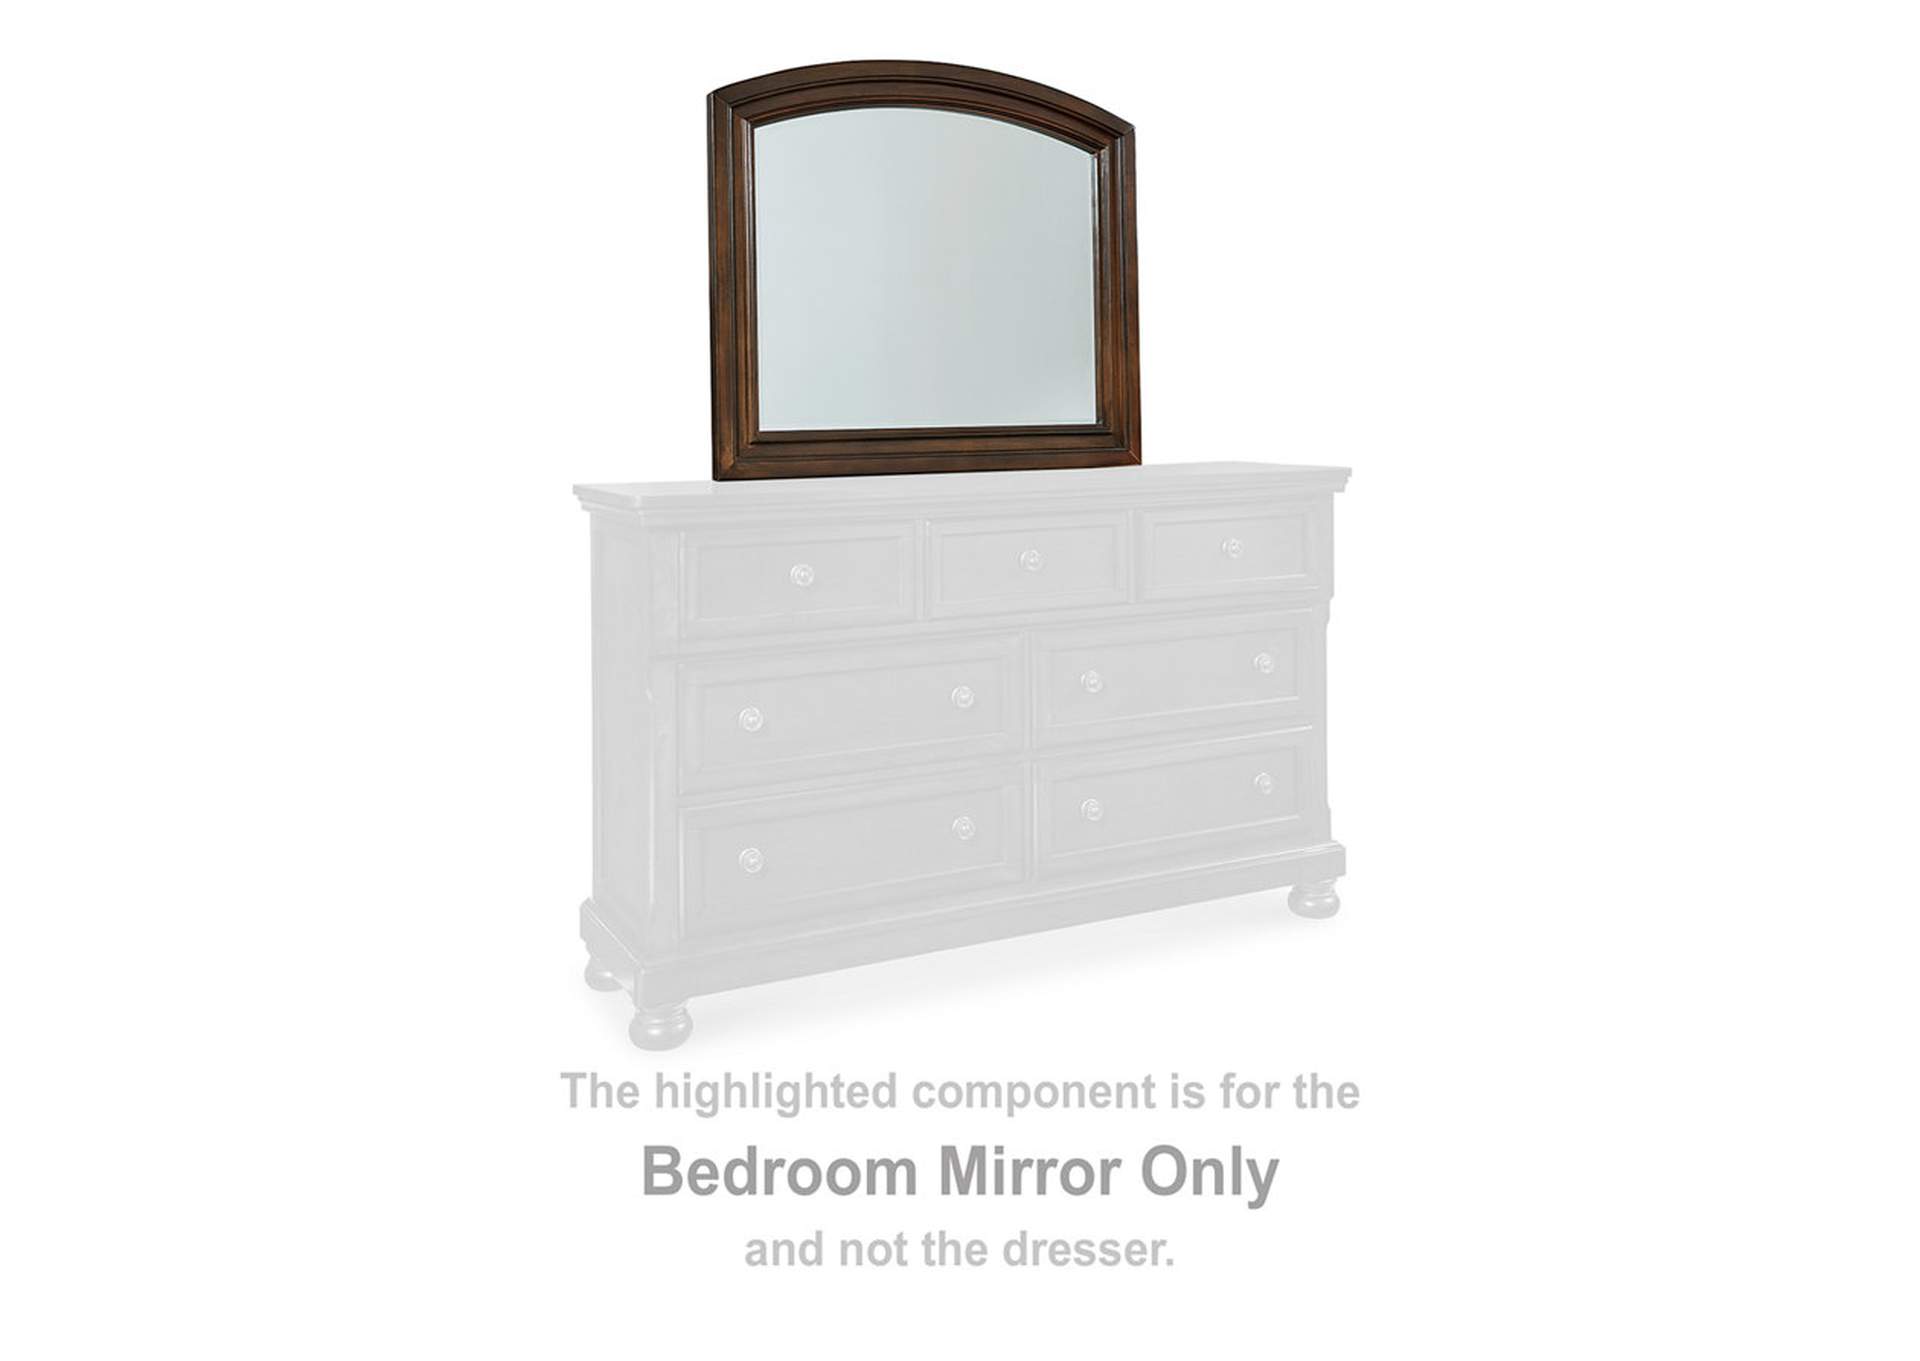 Porter Queen Panel Bed, Dresser and Mirror,Millennium